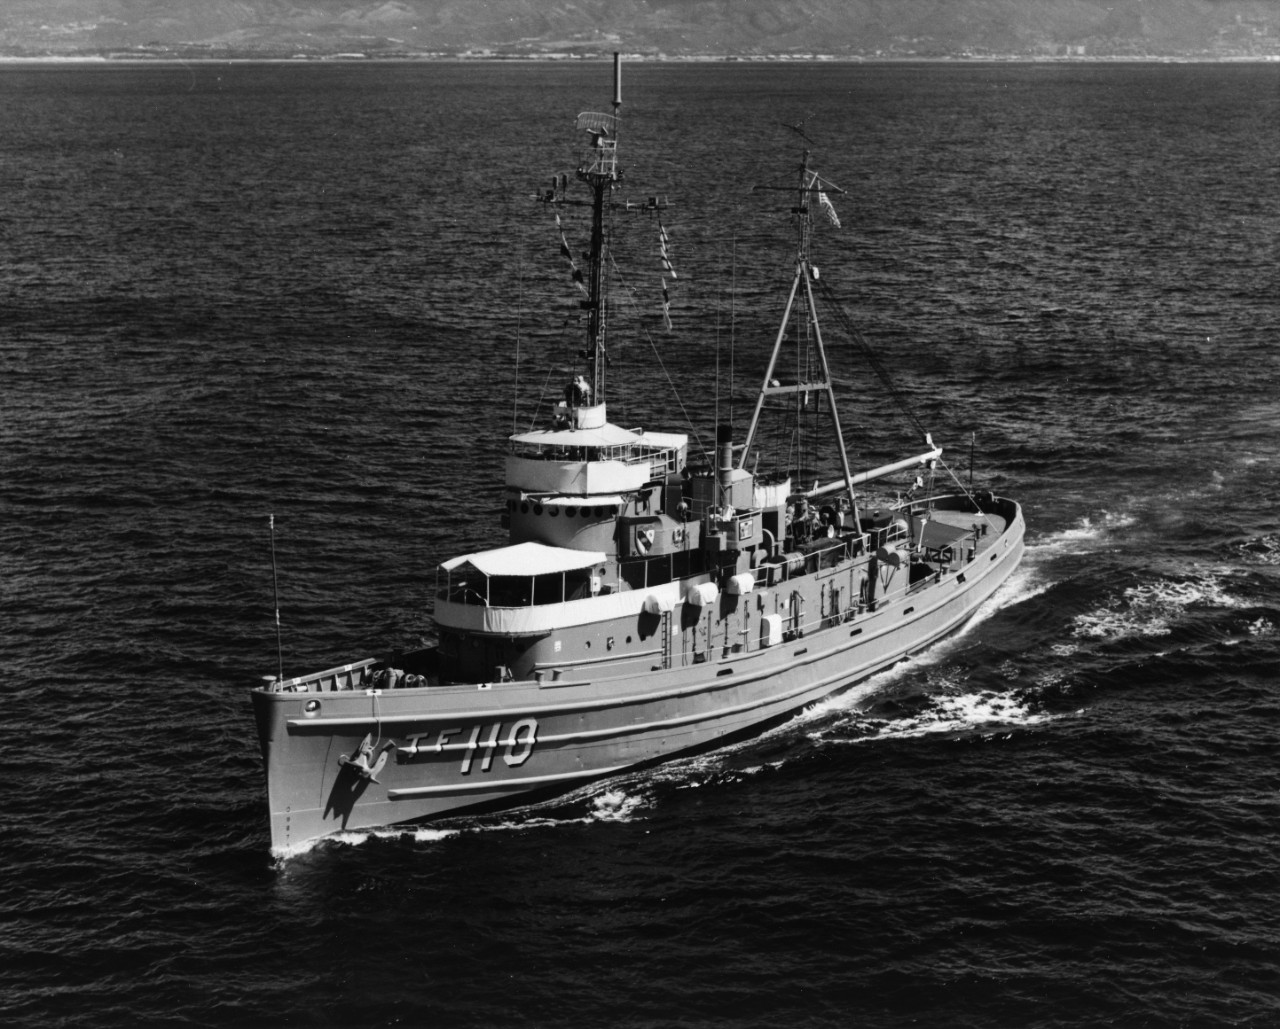 Fleet ocean tug USS Quapaw (ATF-110) underway in the Pacific Ocean